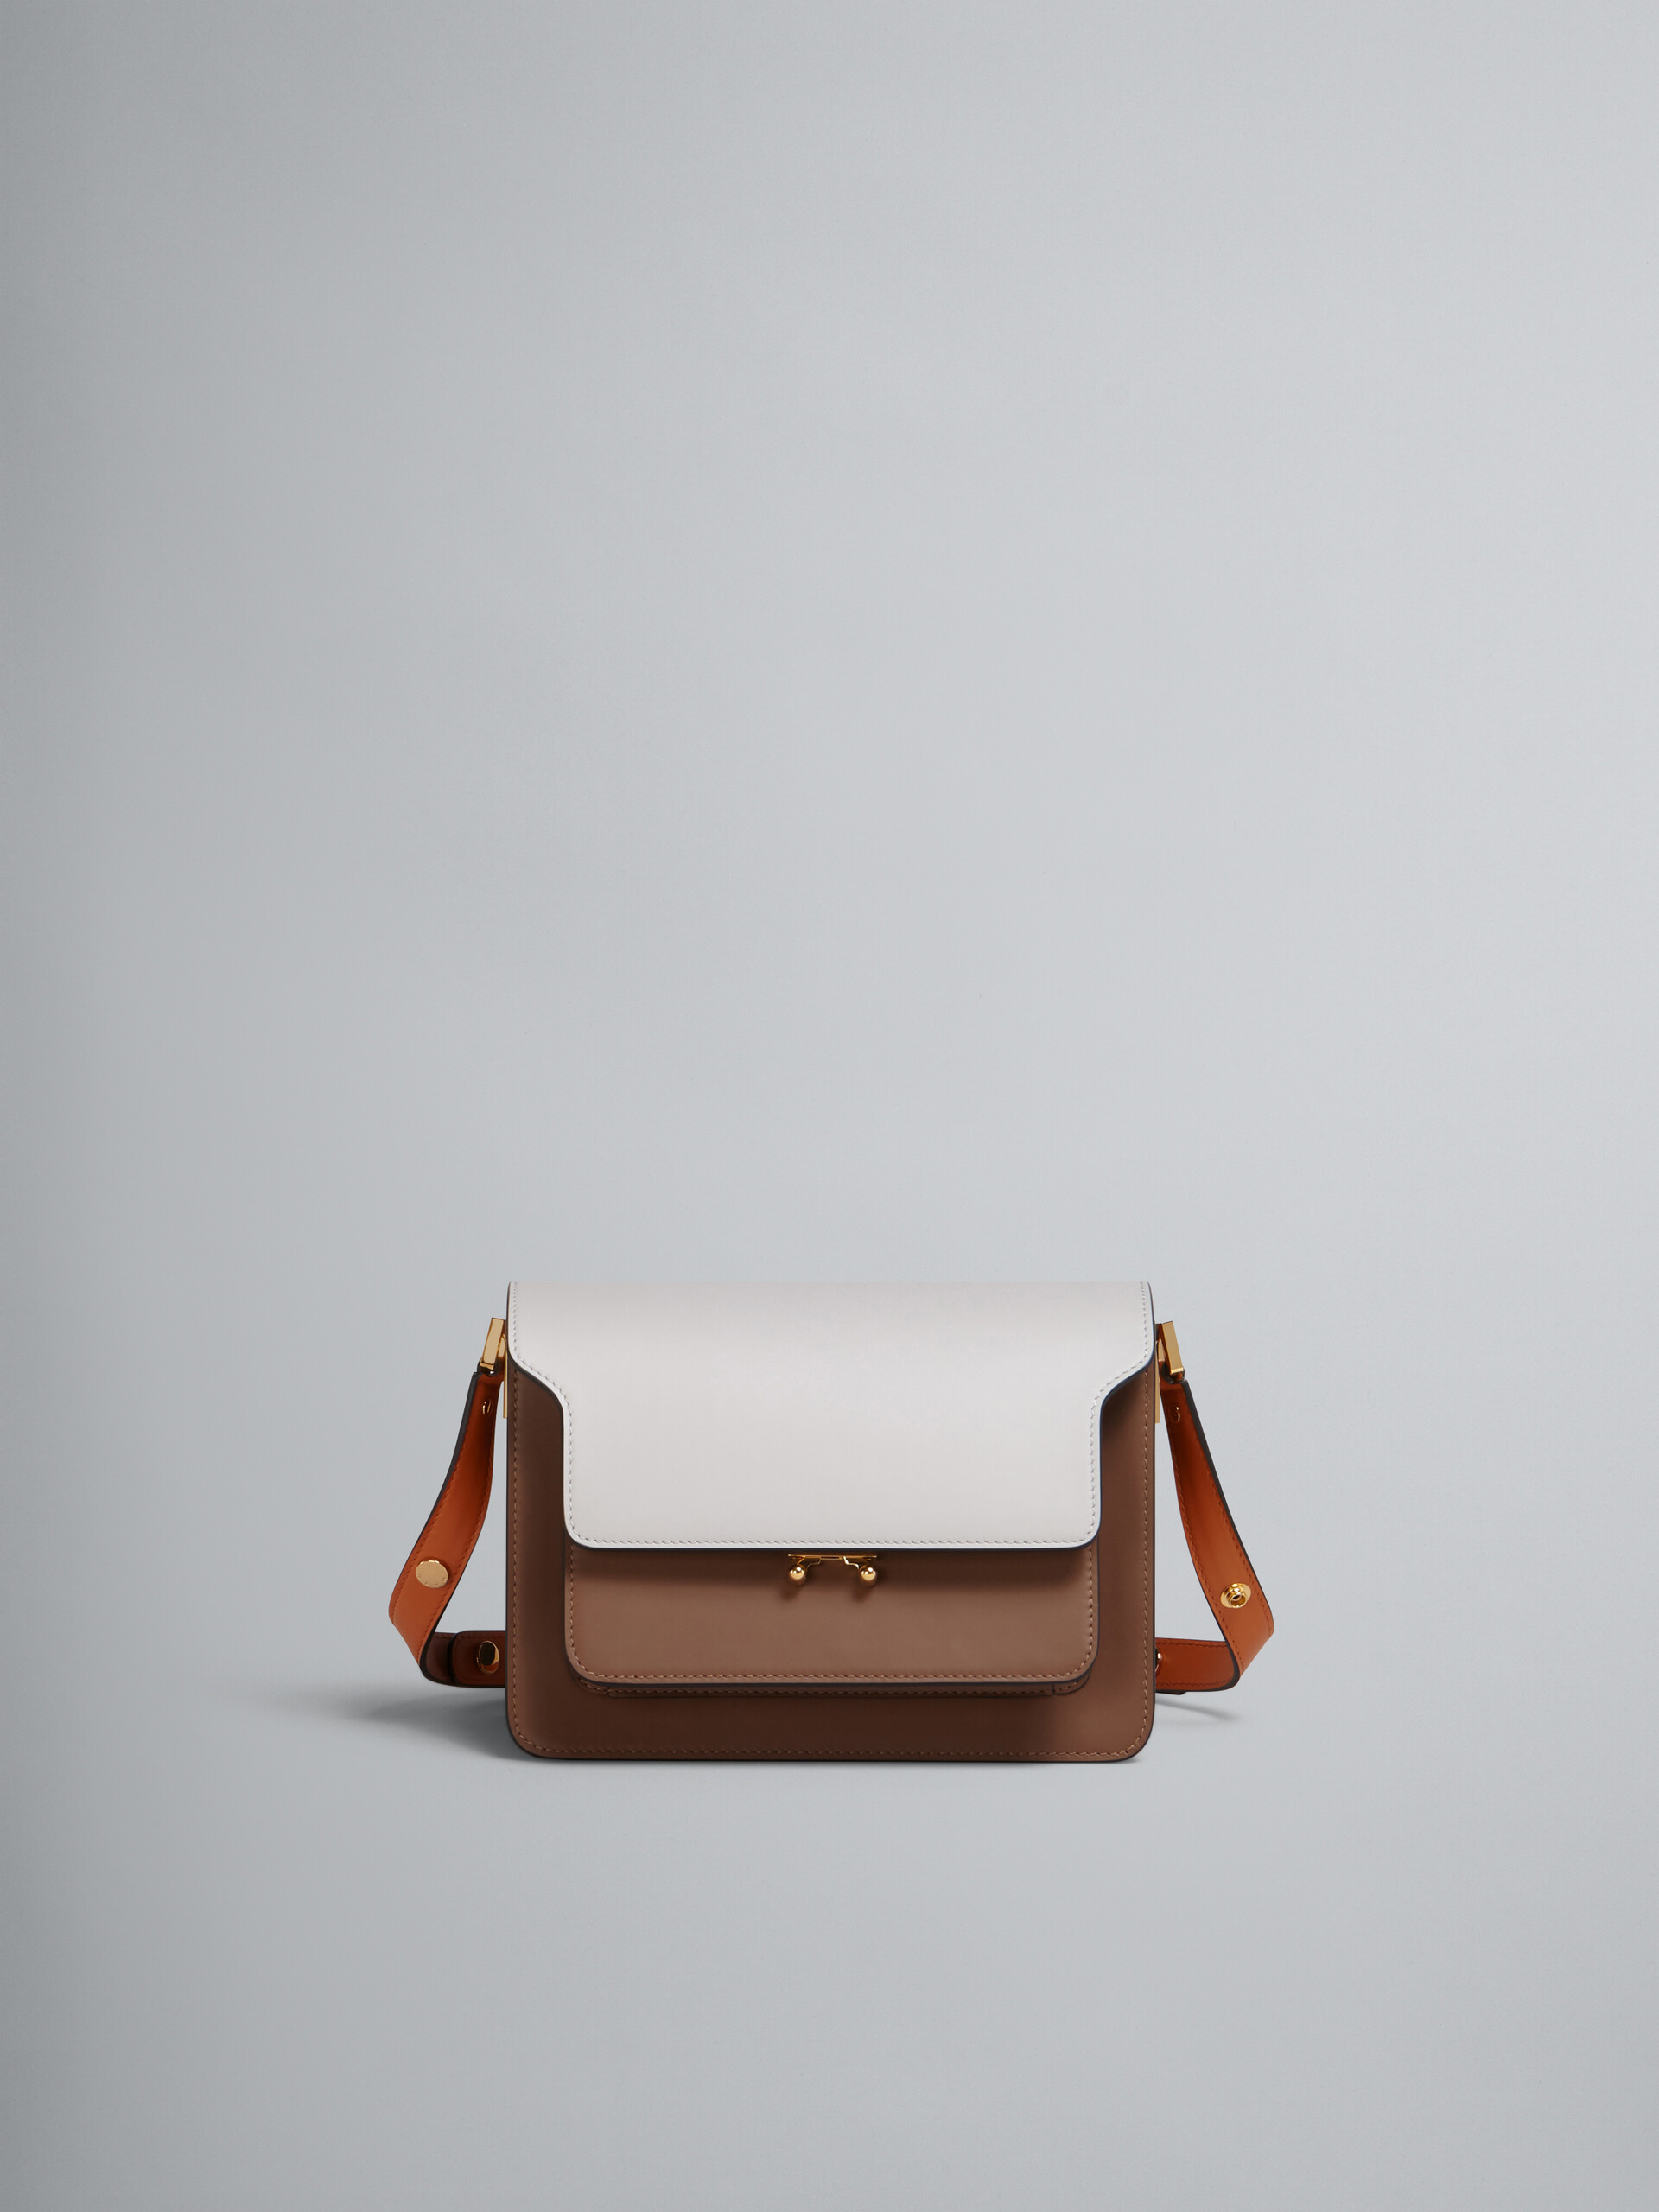 TRUNK medium bag in grey brown and orange leather